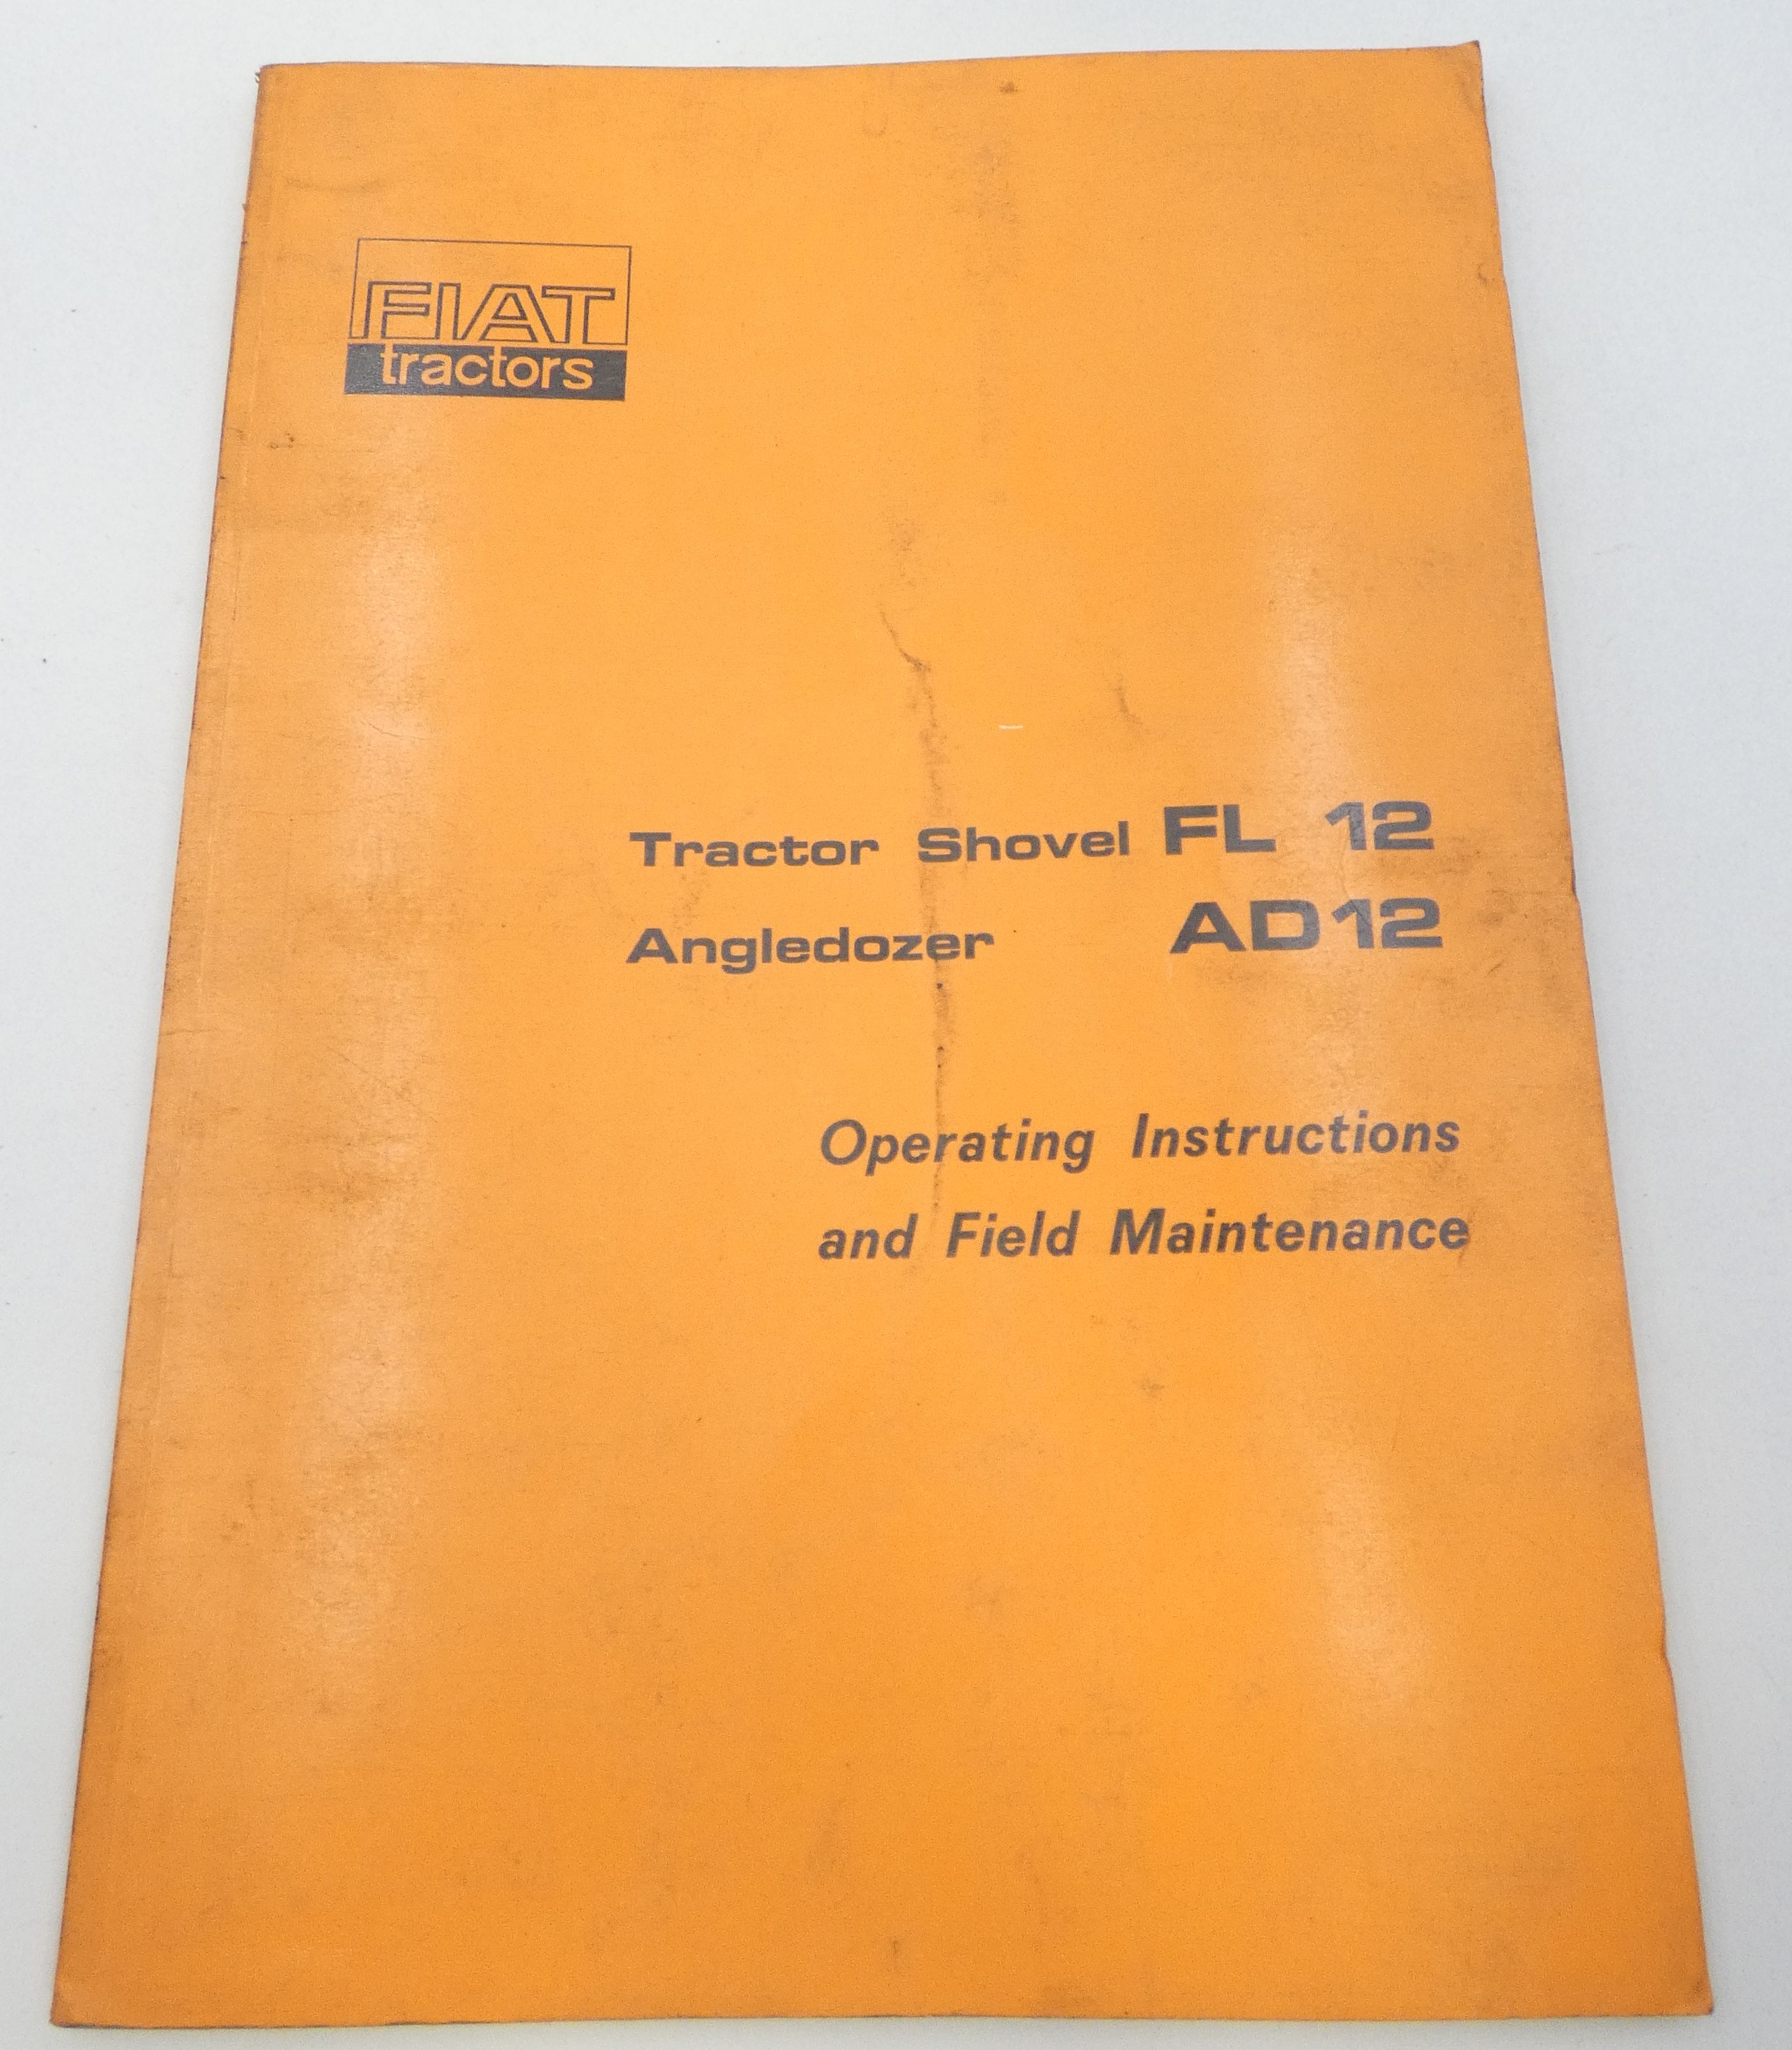 Fiat tractor shovel Fl12, Angledozer AD12 operating instructions and field maintenance